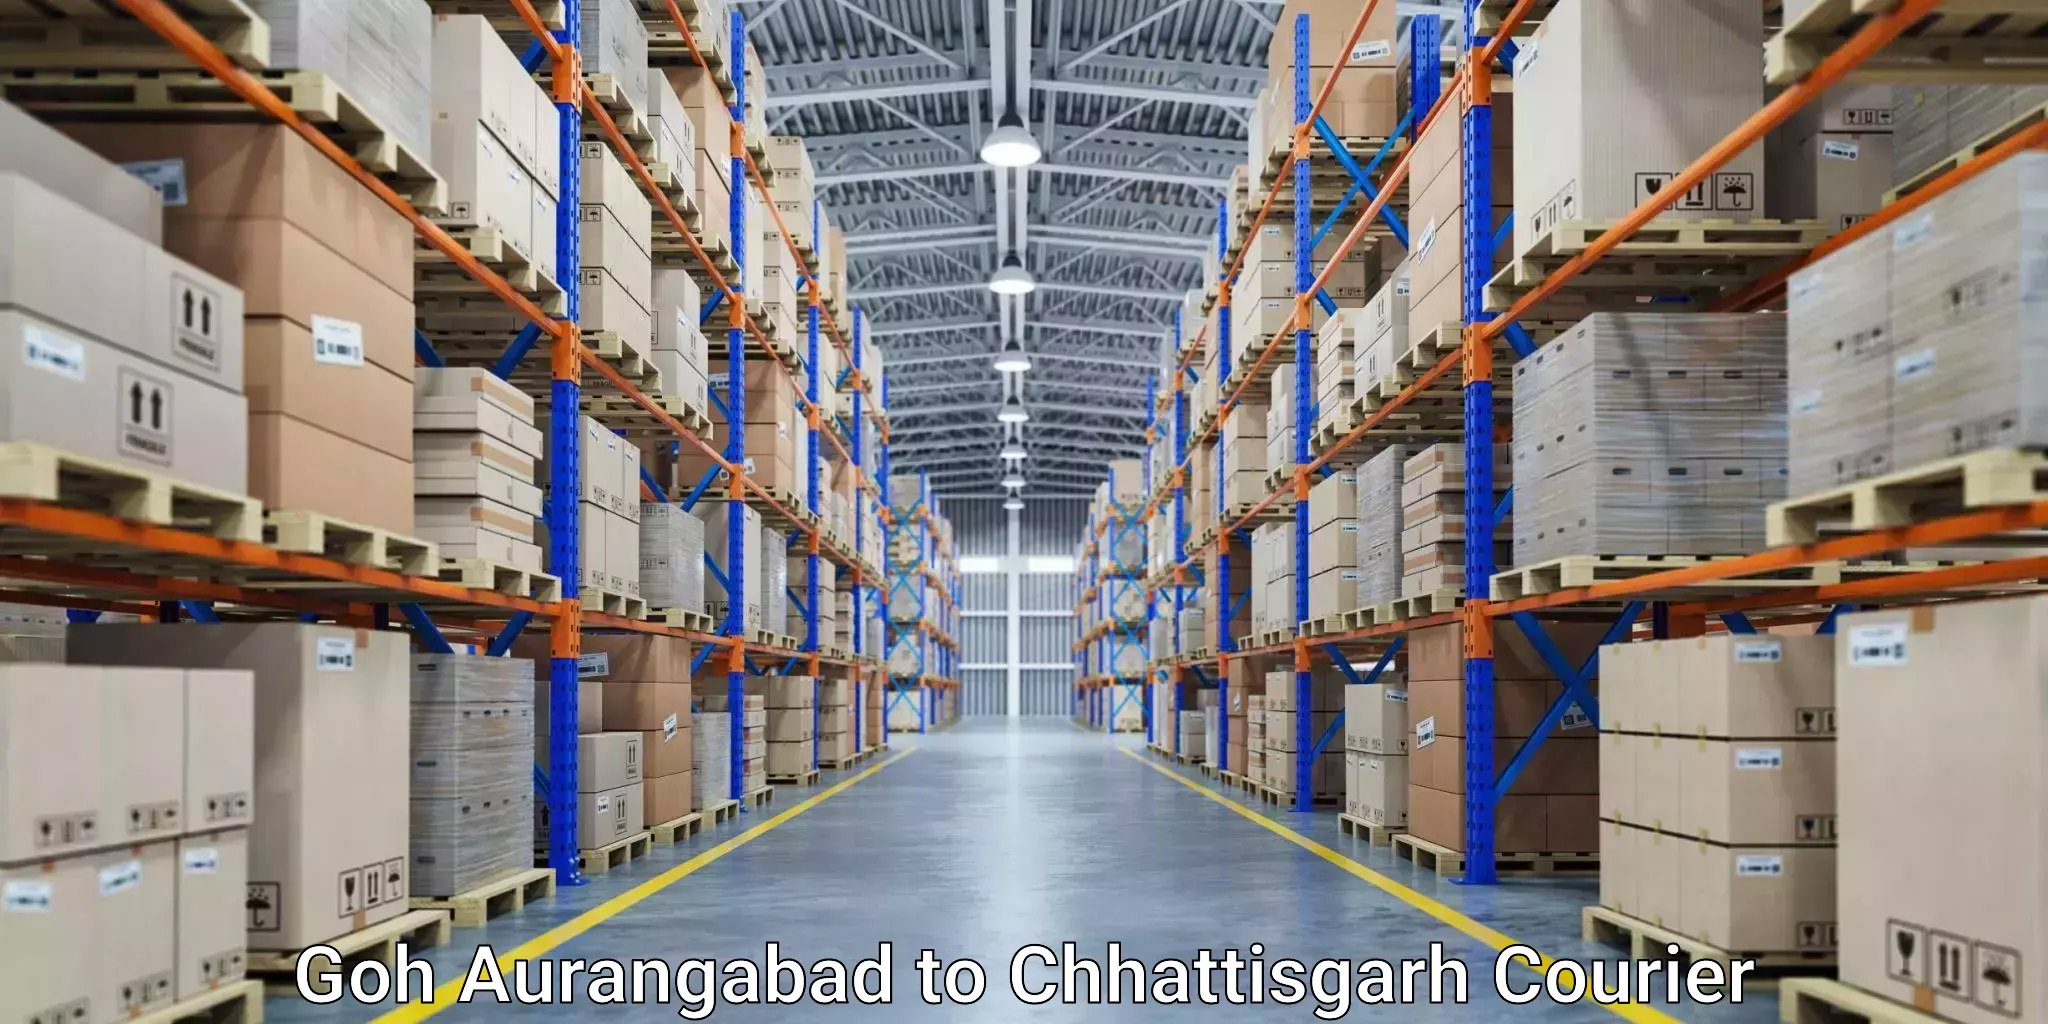 Nationwide delivery network Goh Aurangabad to Korea Chhattisgarh